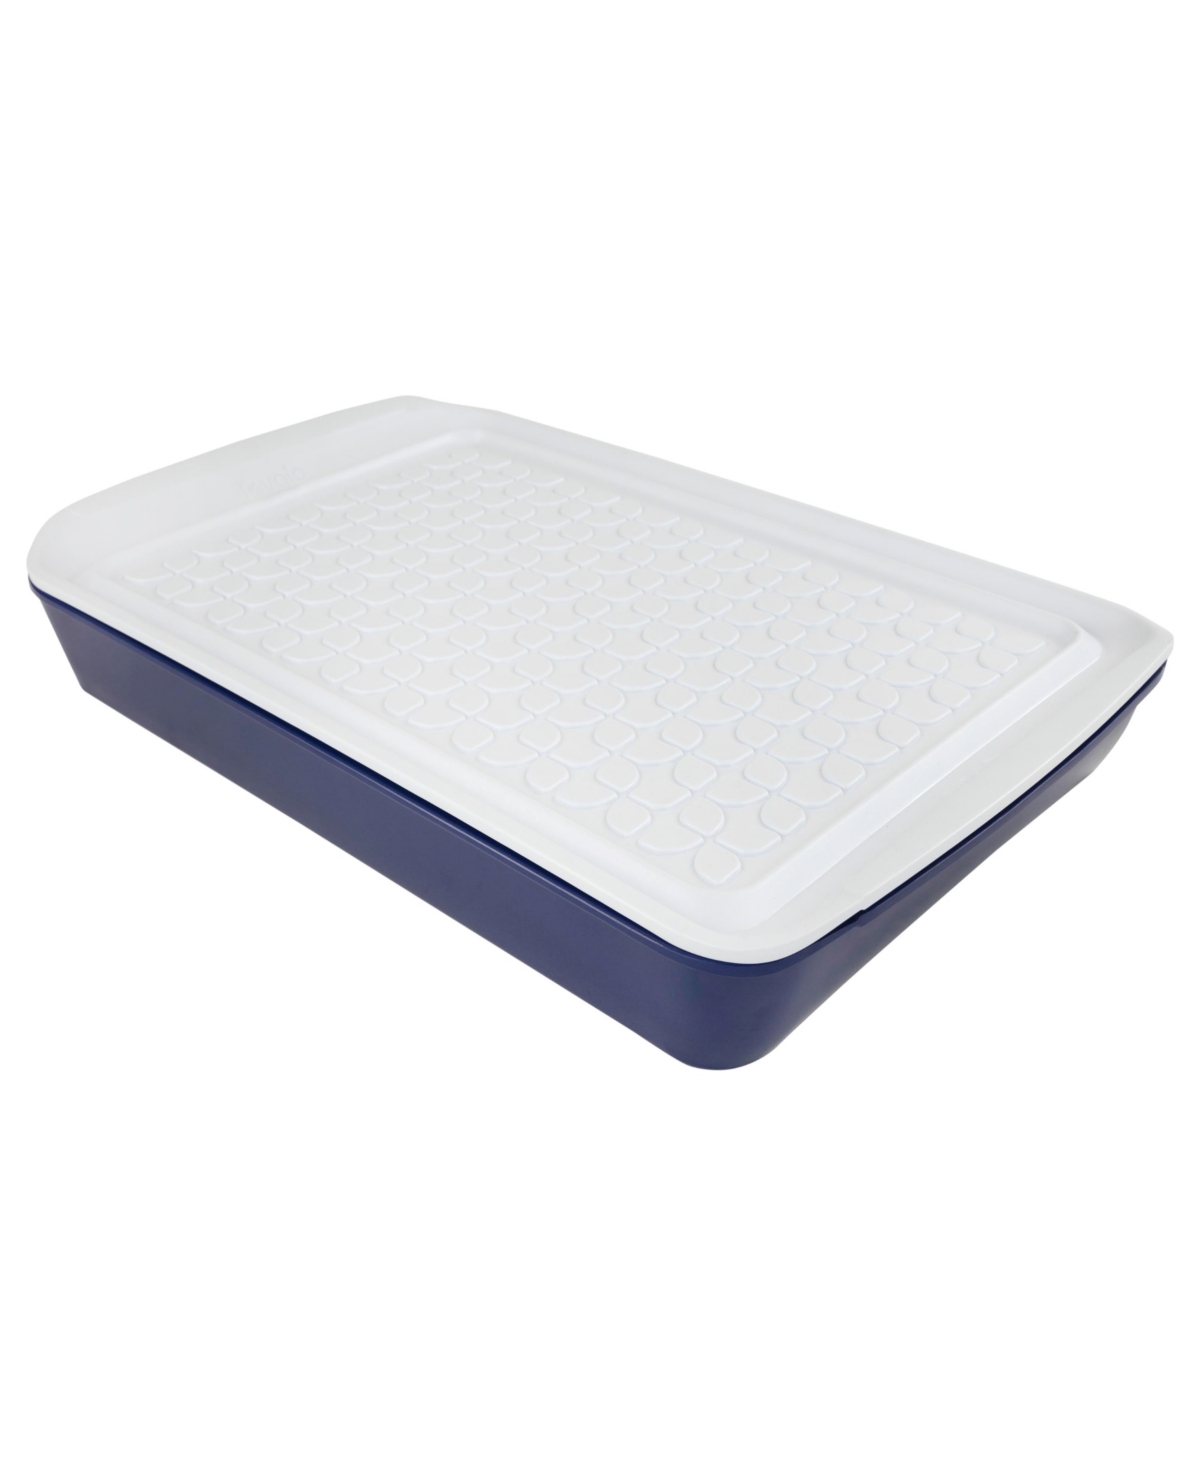 Prep Serve Large Marinade Tray Set - White Tray with Stratus Blue Base